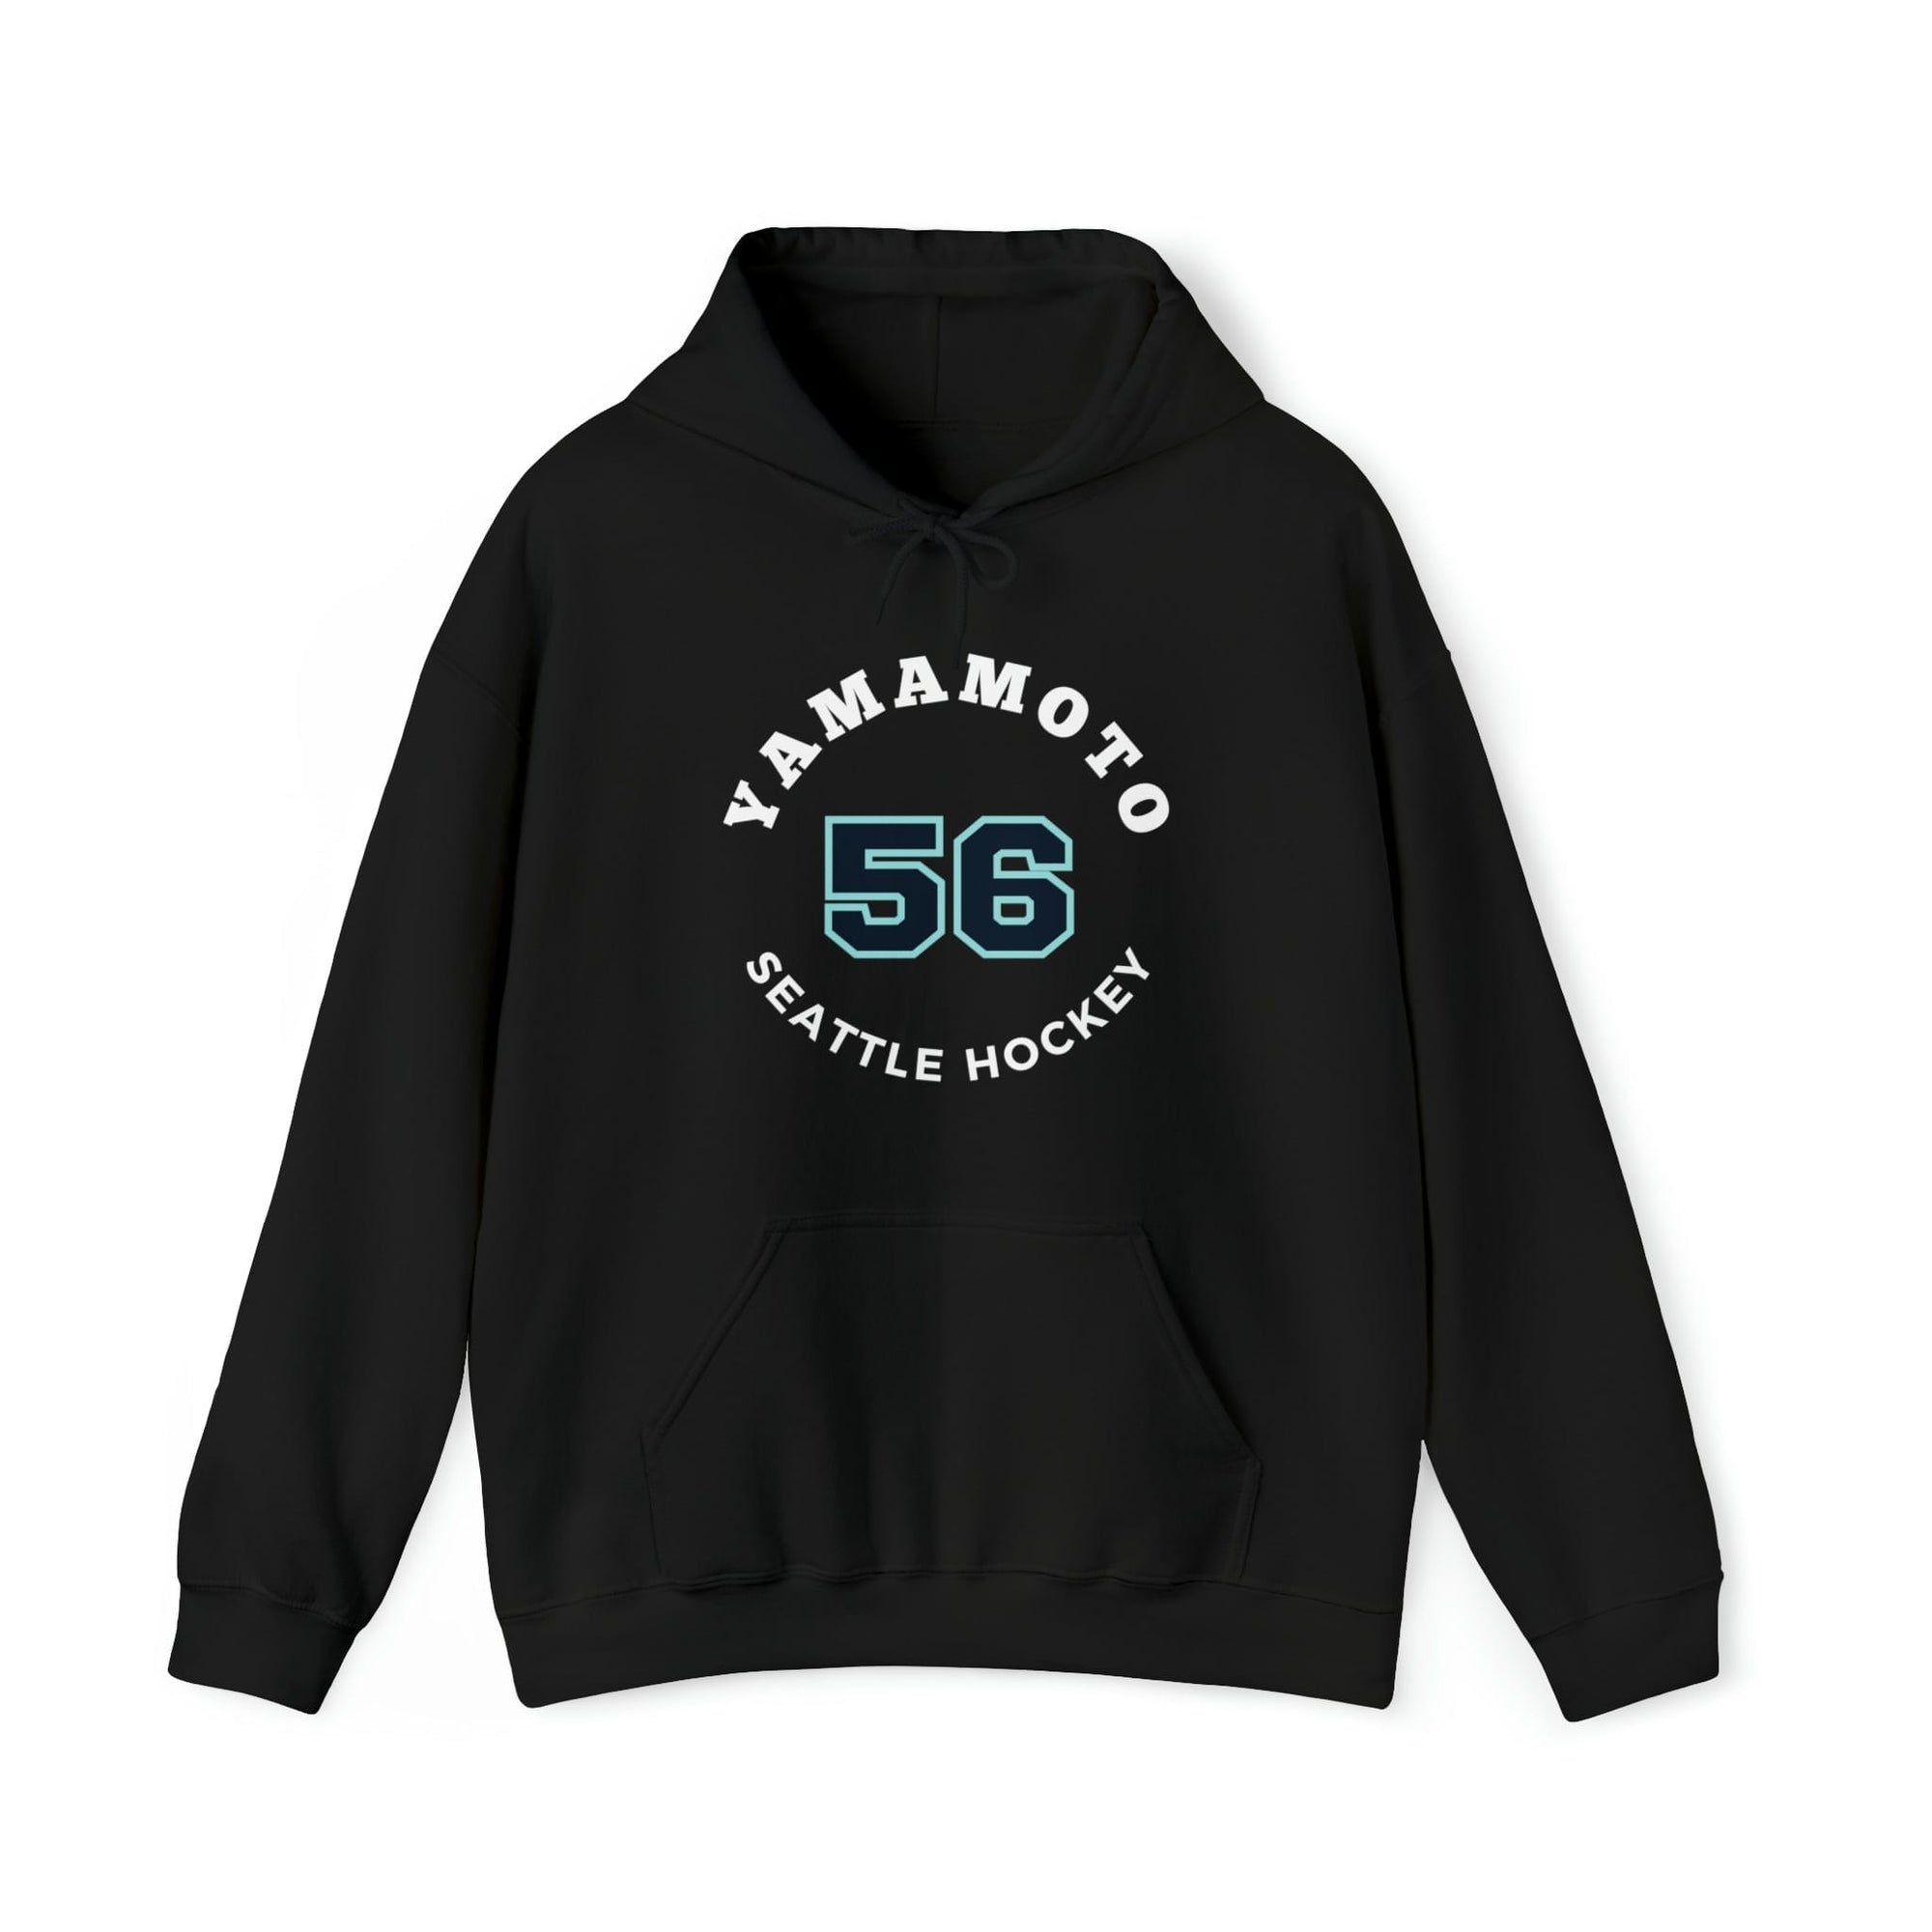 Hoodie Yamamoto 56 Seattle Hockey Number Arch Design Unisex Hooded Sweatshirt